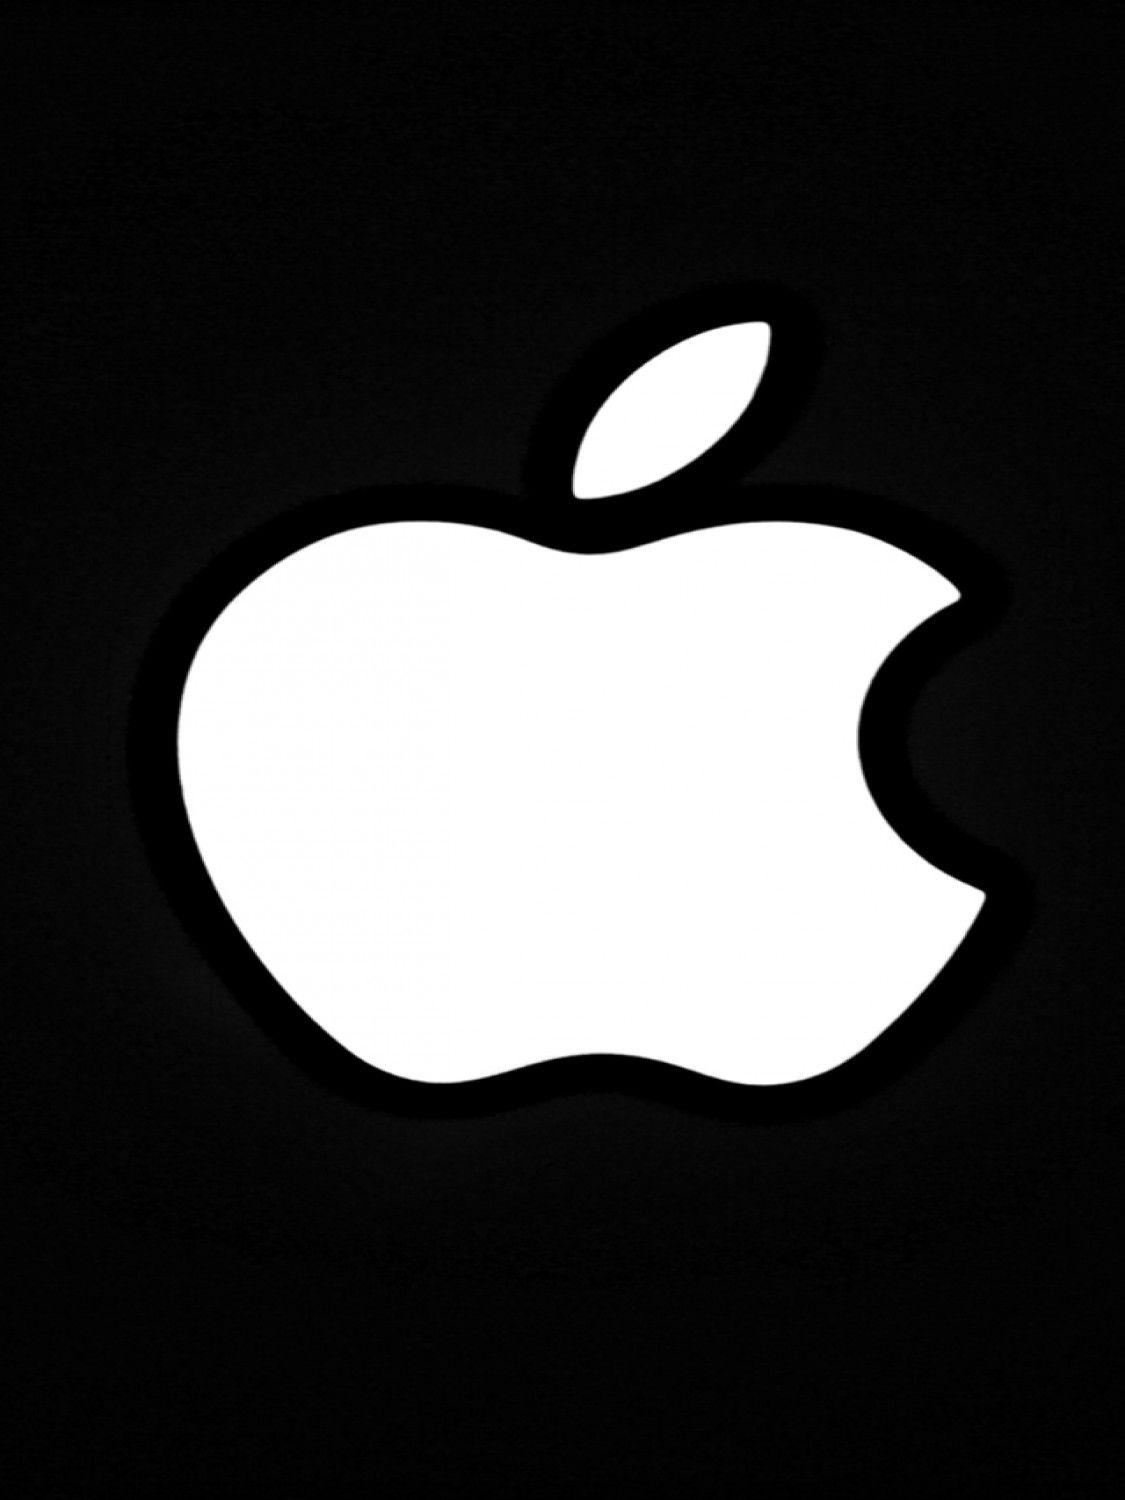 On Black Background iPhone Logo - Apple Logo Black Backgrounds - Wallpaper Cave